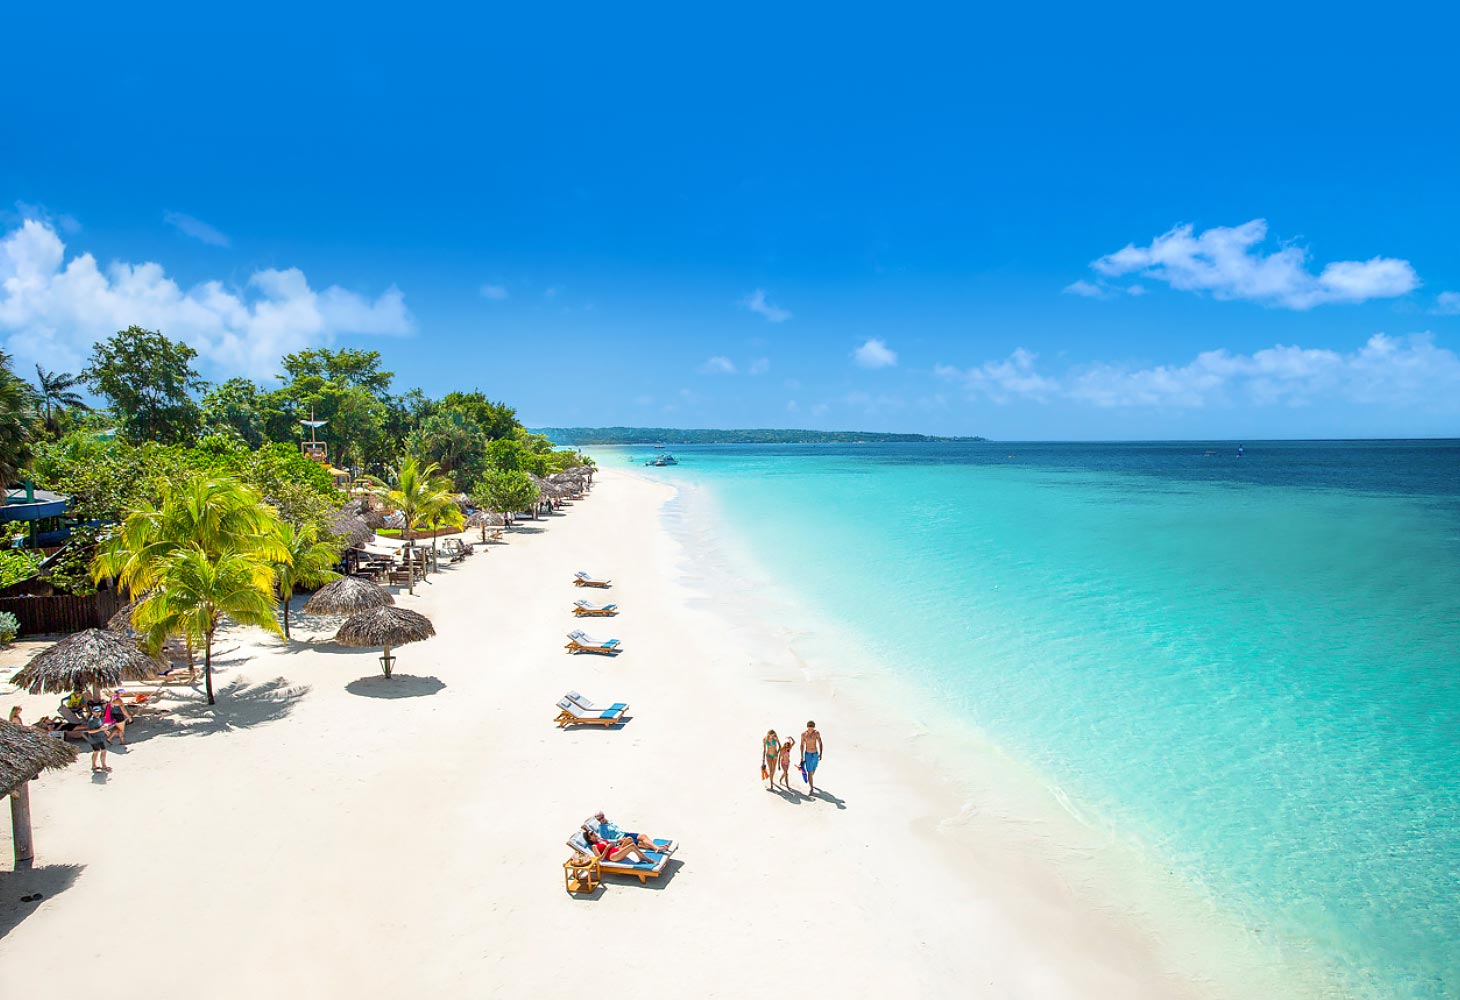 Sandals Montego Bay All Inclusive Resort in Jamaica